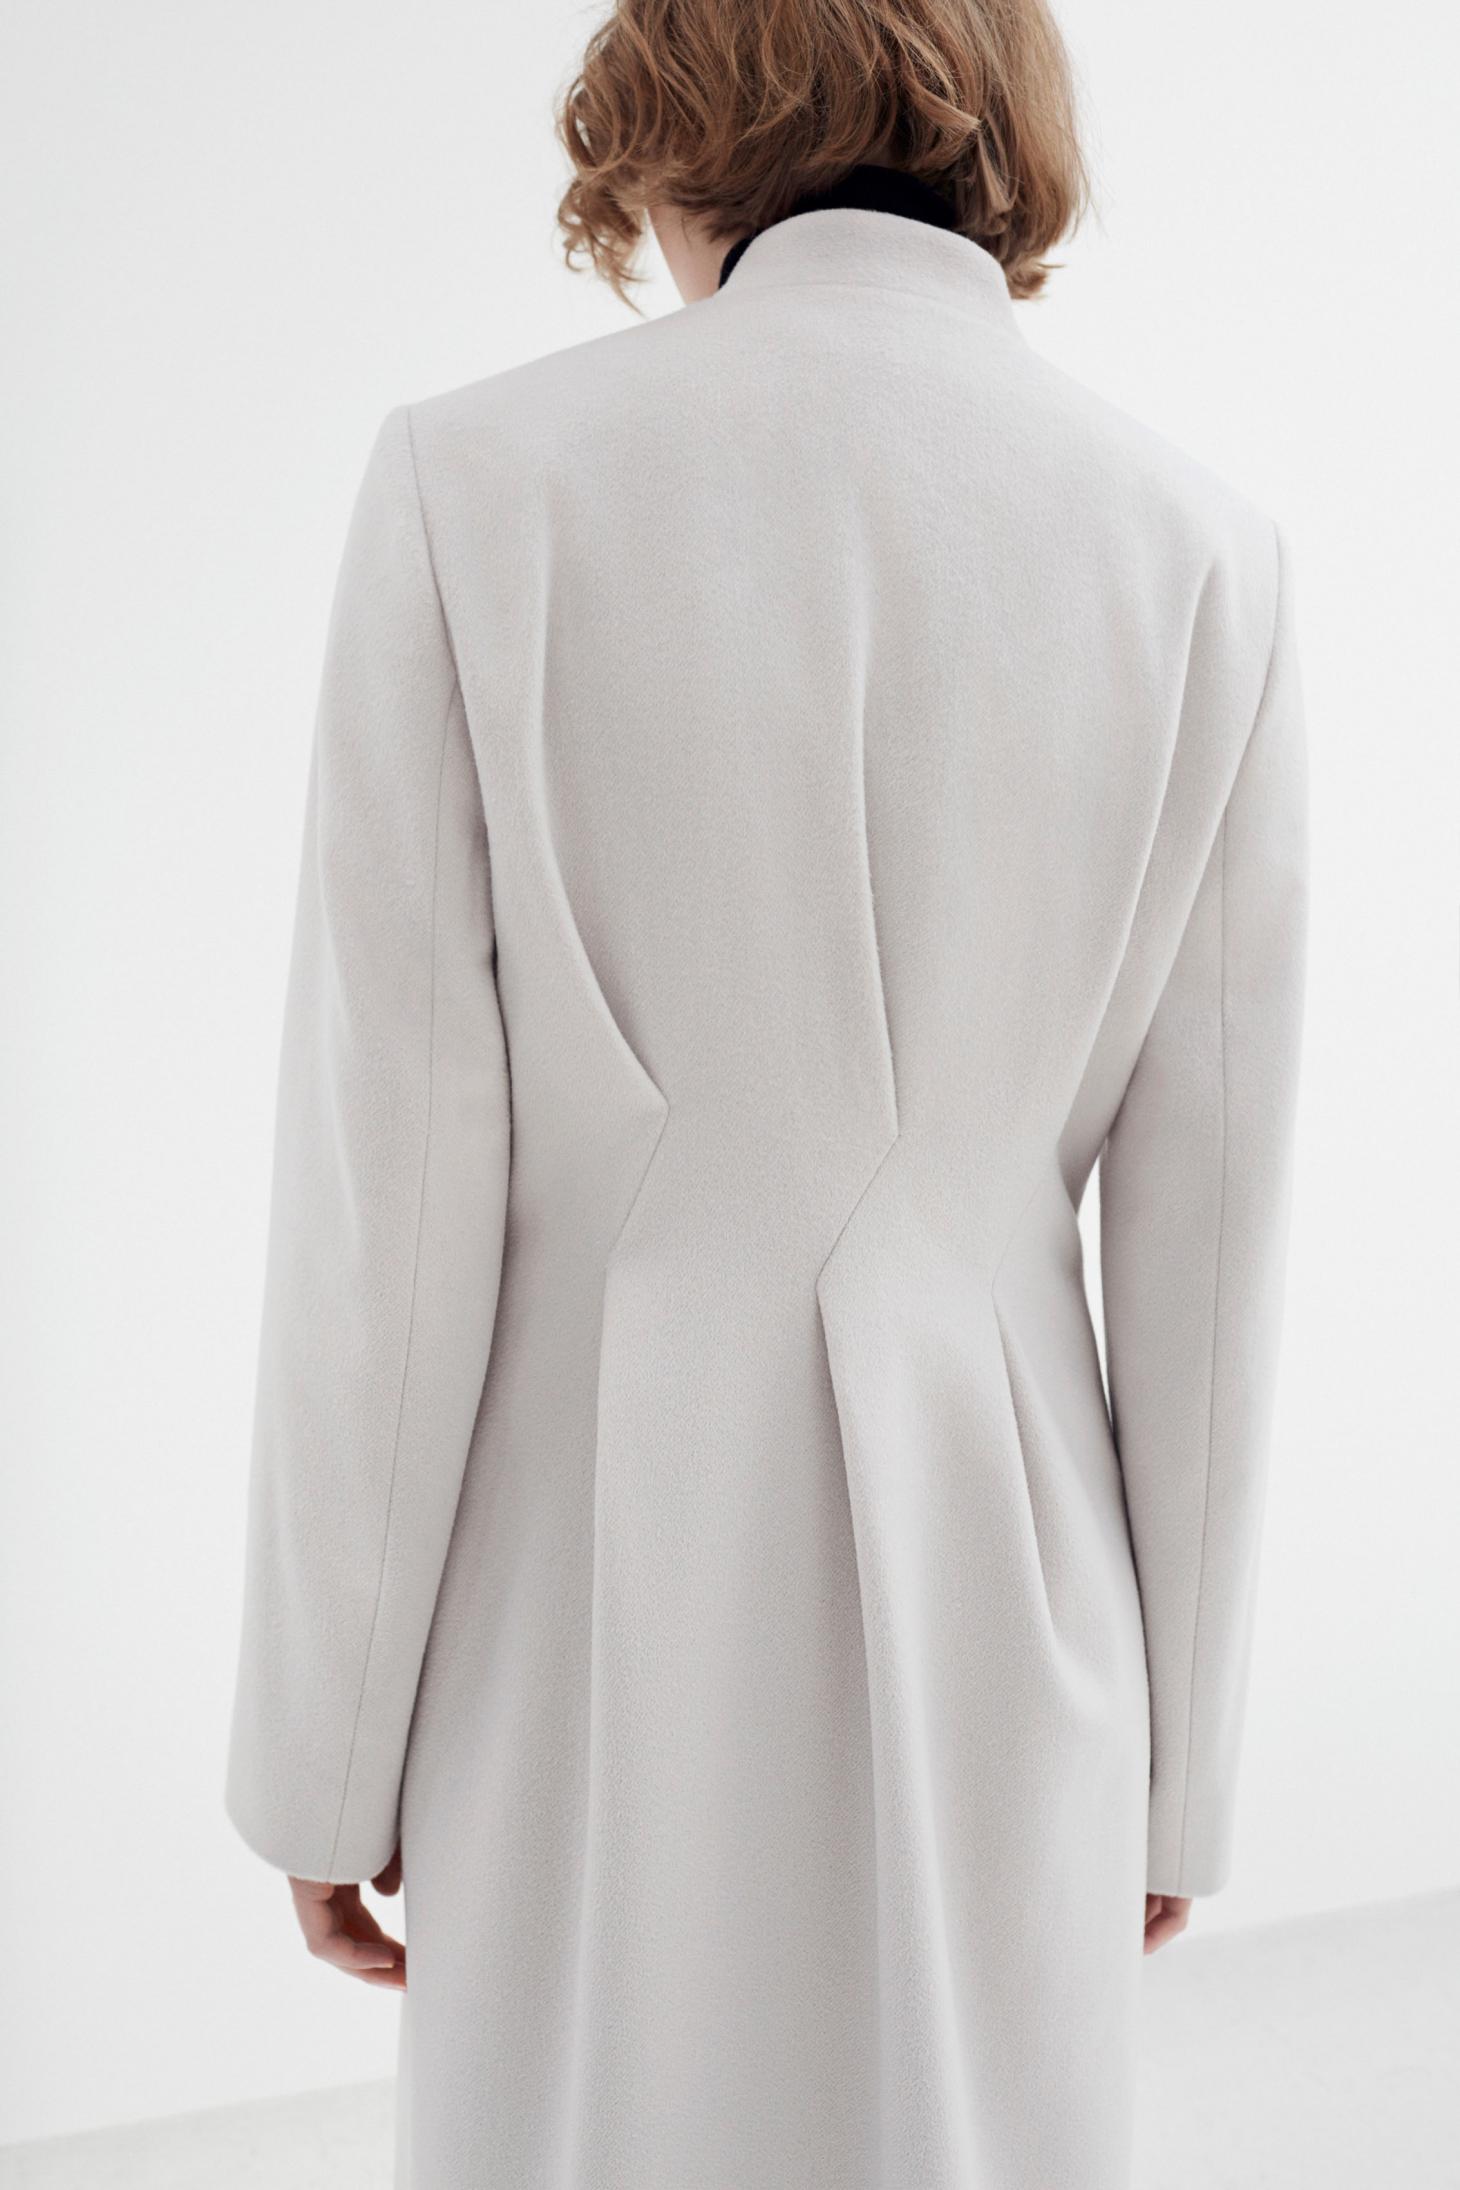 doshi wallpaper,clothing,white,outerwear,robe,coat